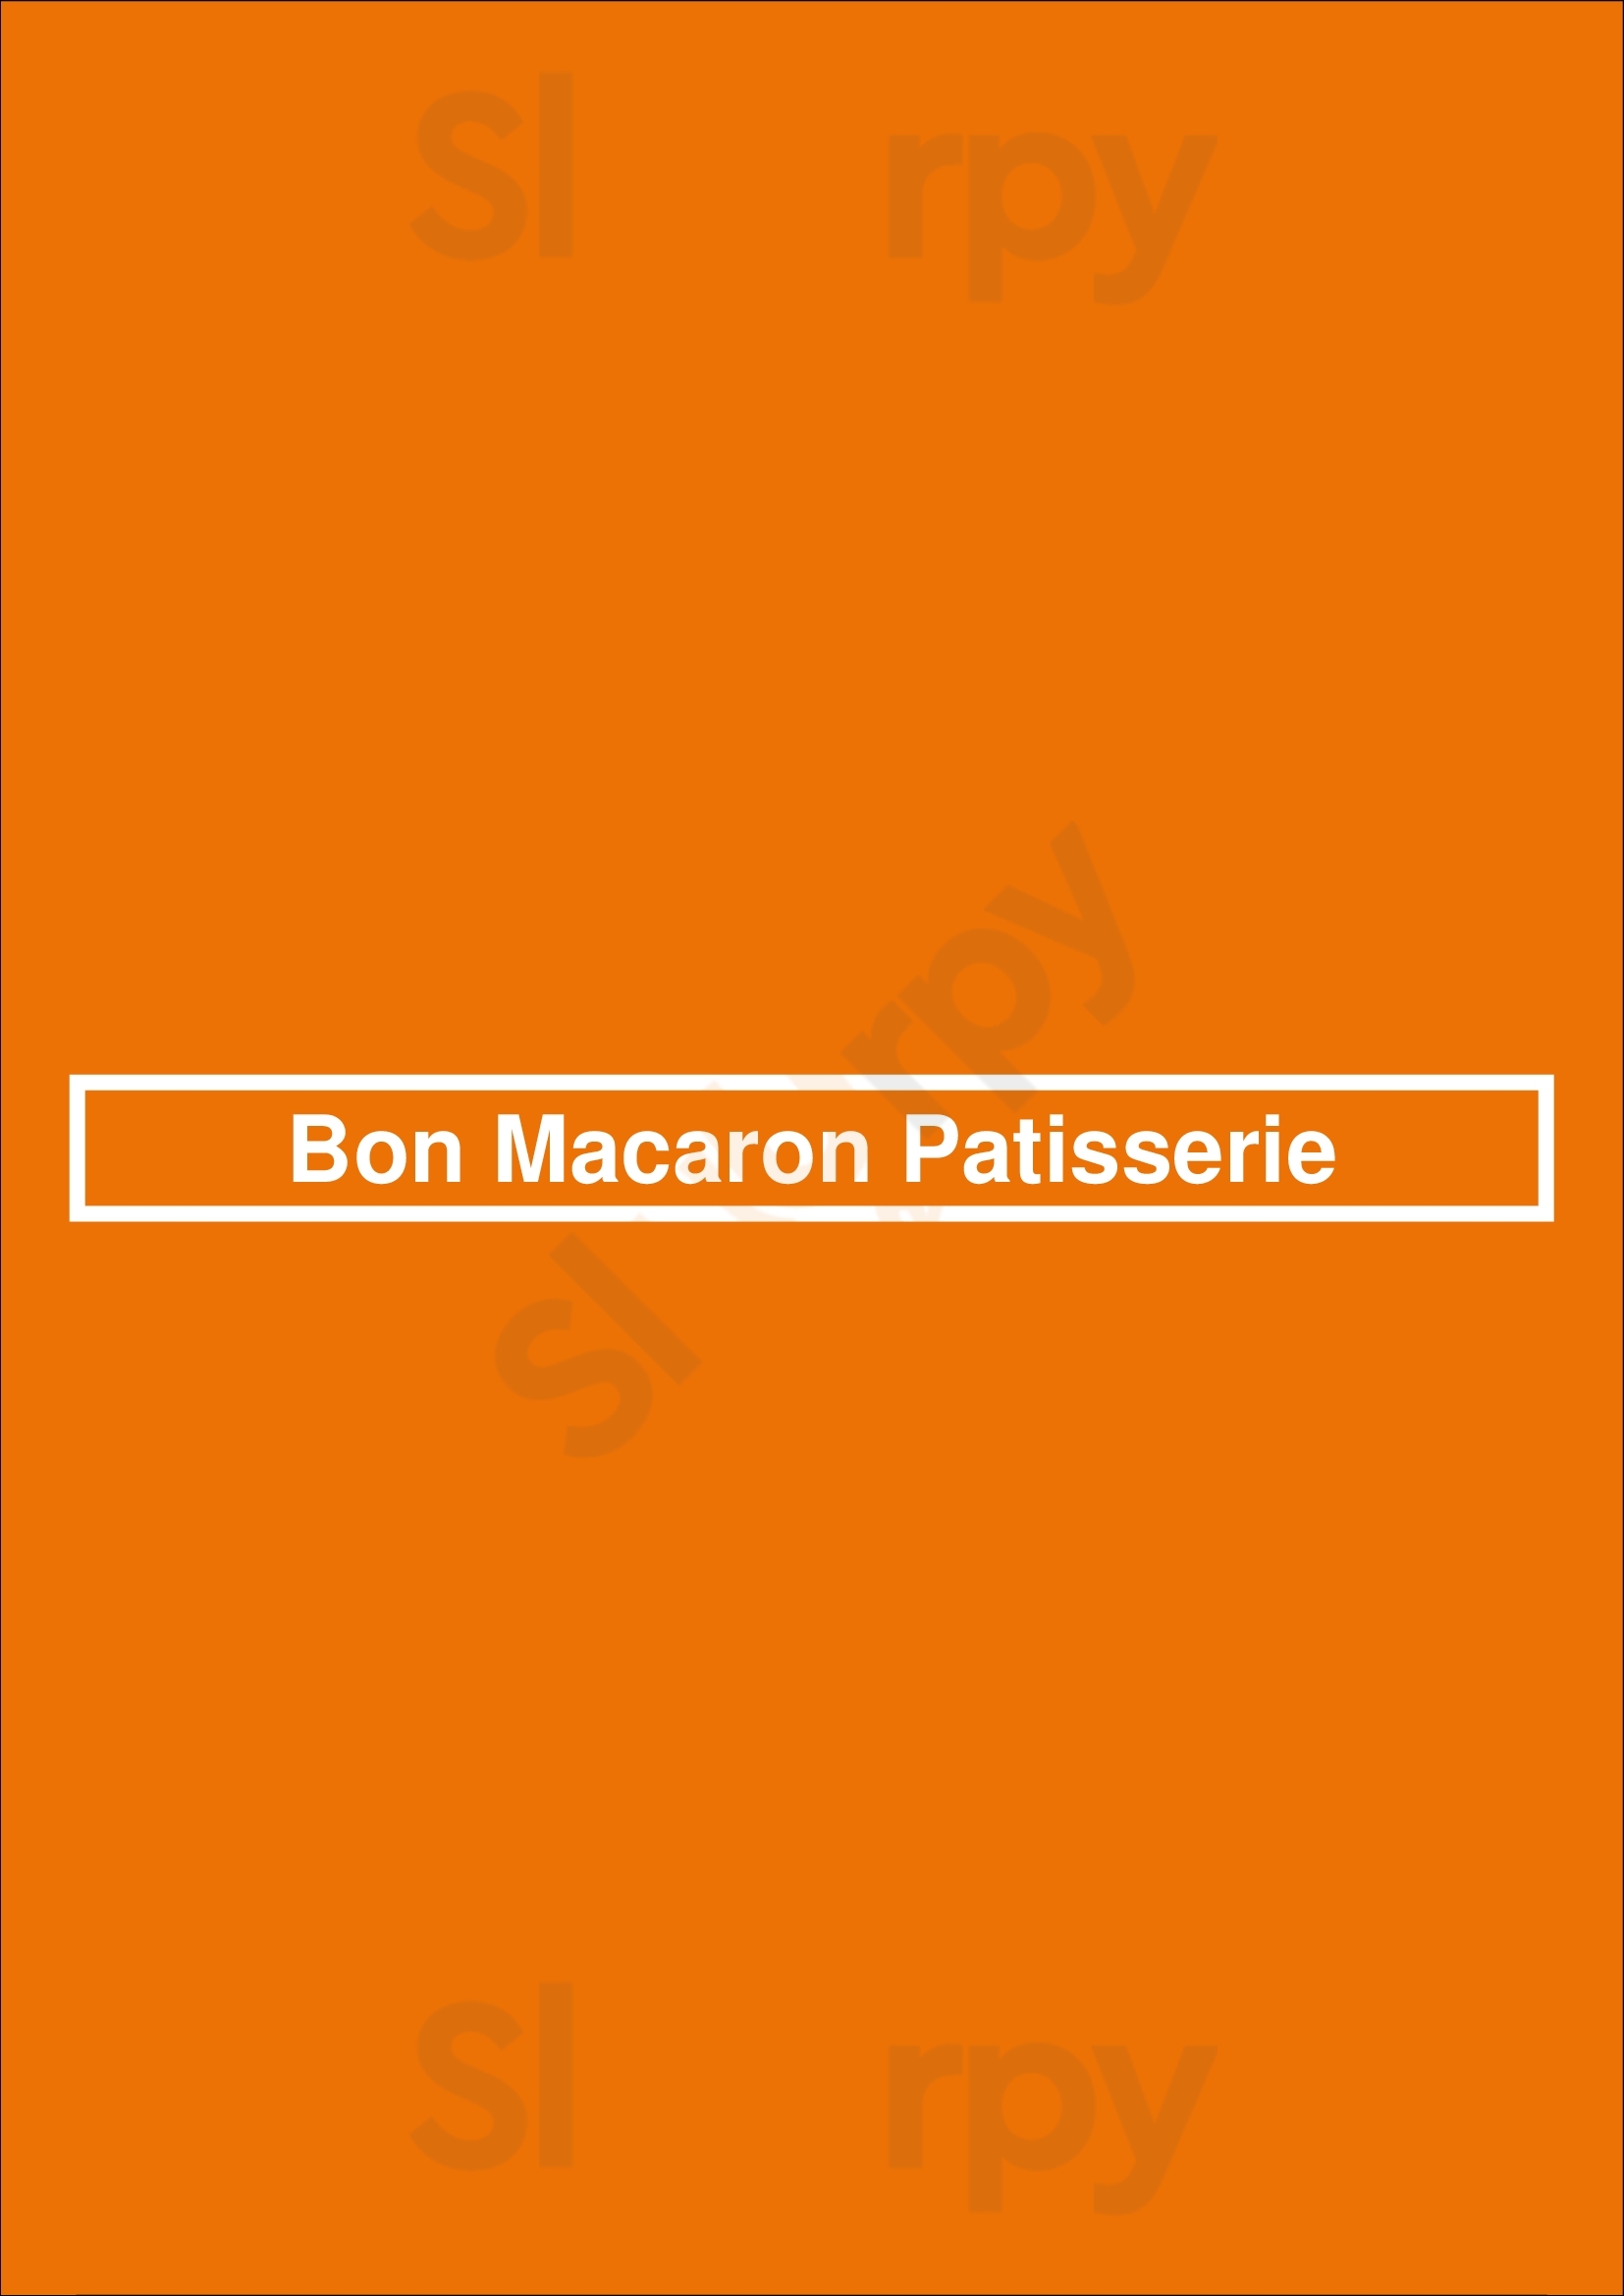 Bon Macaron Patisserie Vancouver Menu - 1